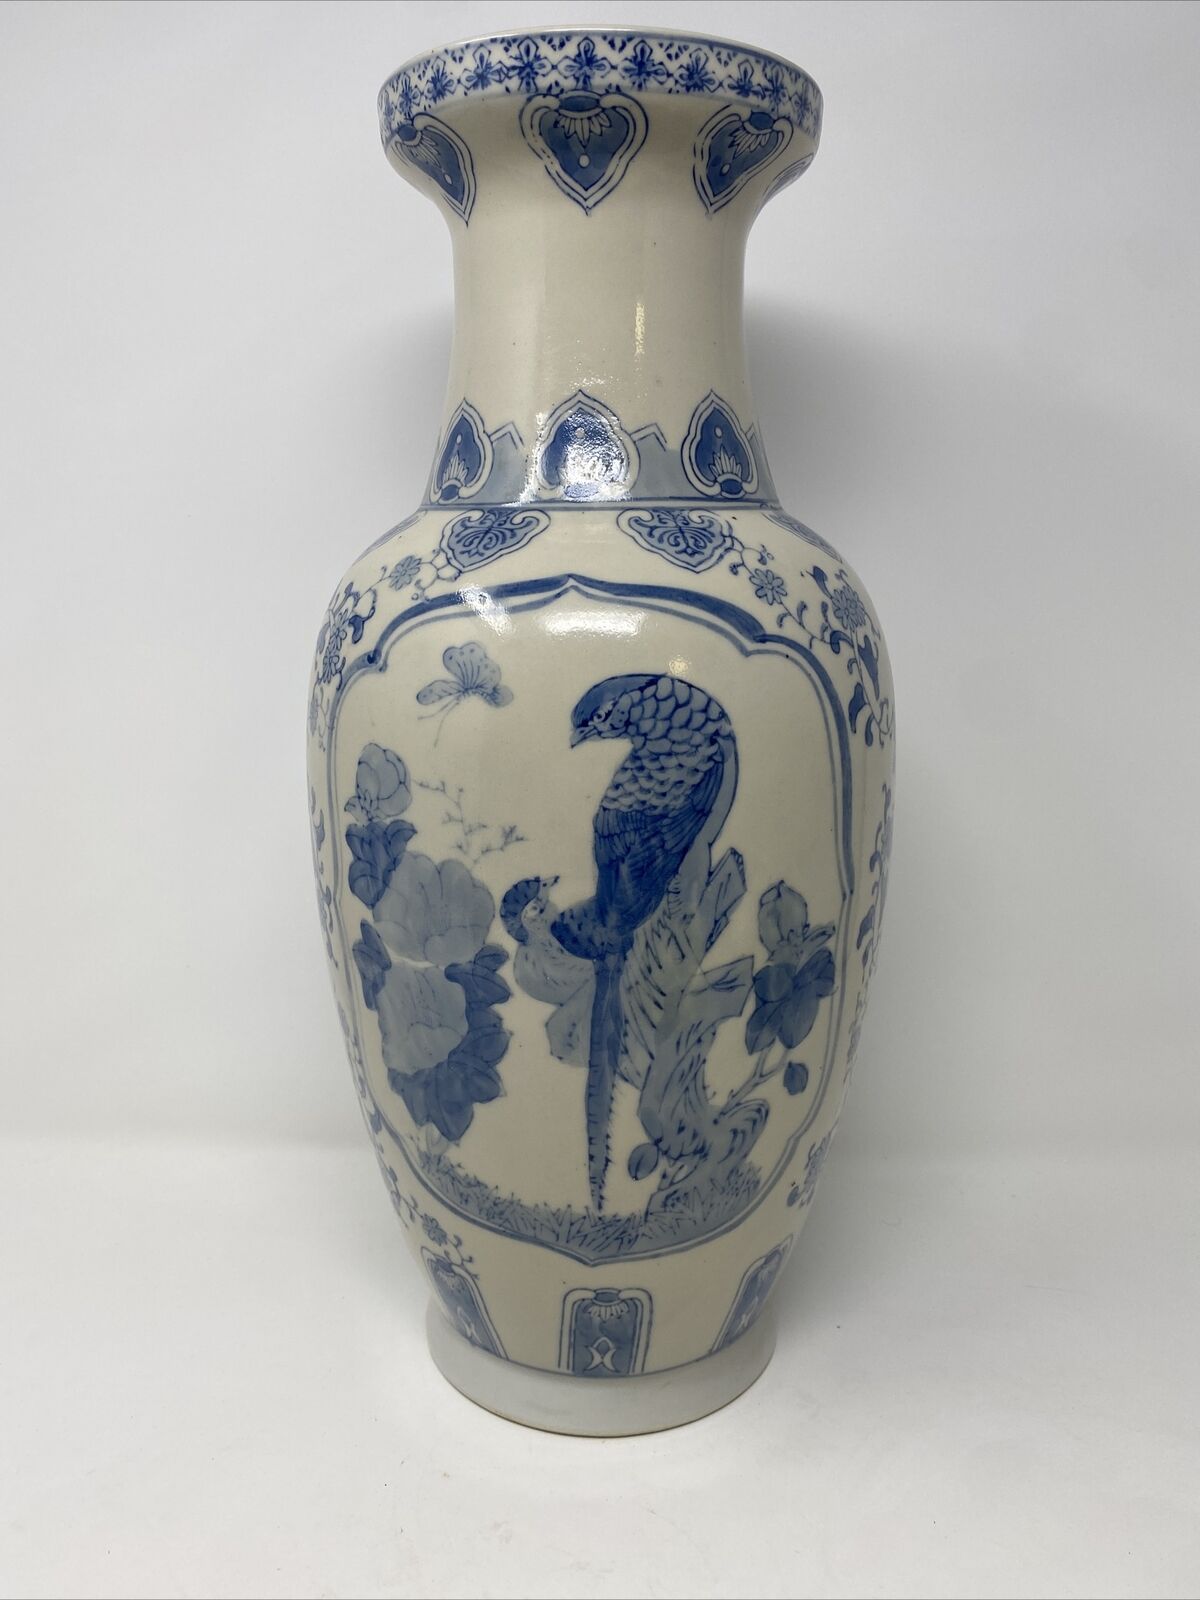 Vintage Chinese Ceramic Pottery Vase Blue White Birds Flowers Ducks 16.75” Tall